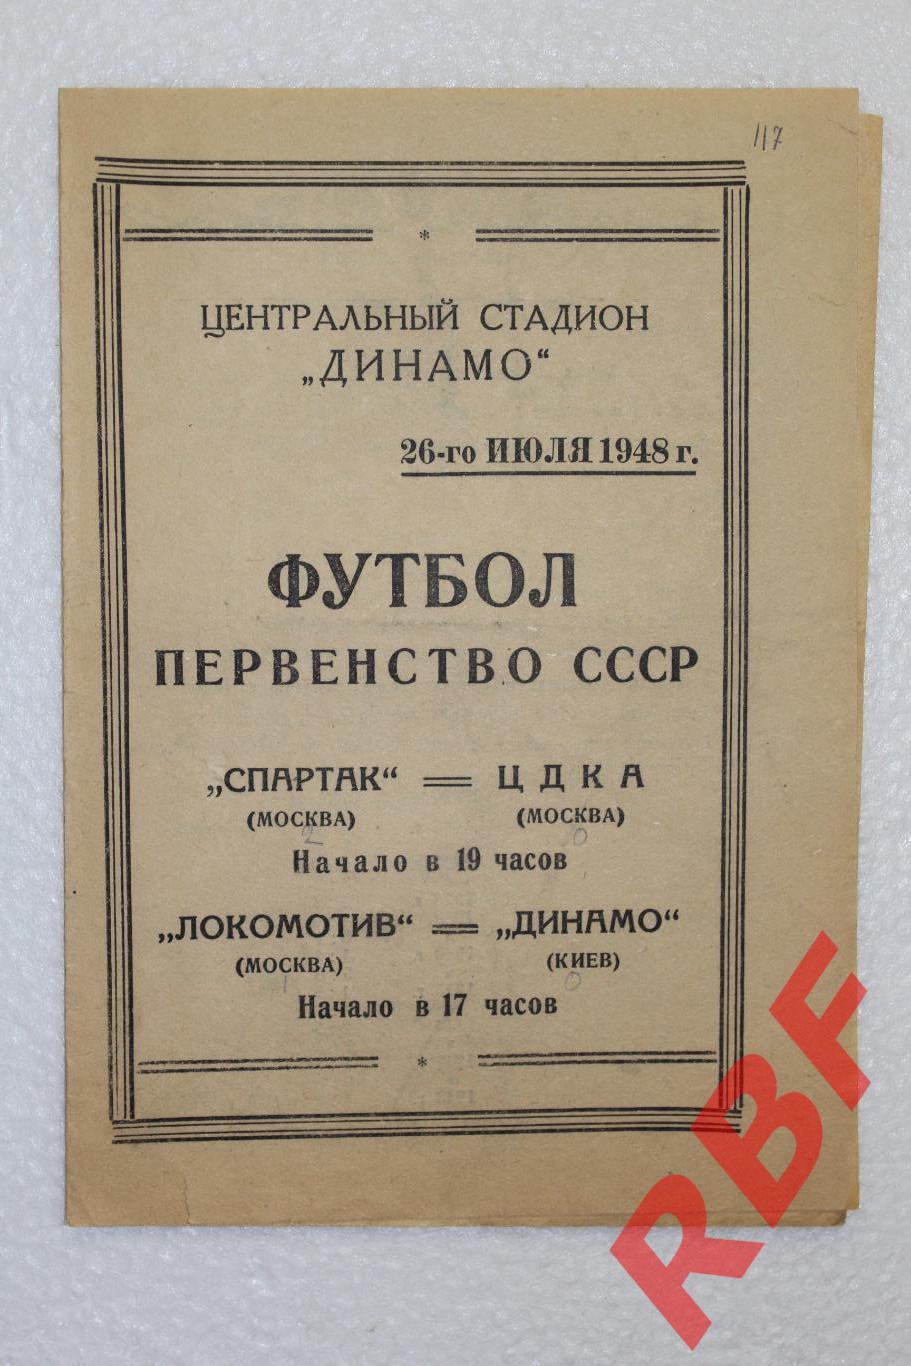 Спартак Москва - ЦДКА Москва ,Локомотив Москва - Динамо Киев,26 июля 1948